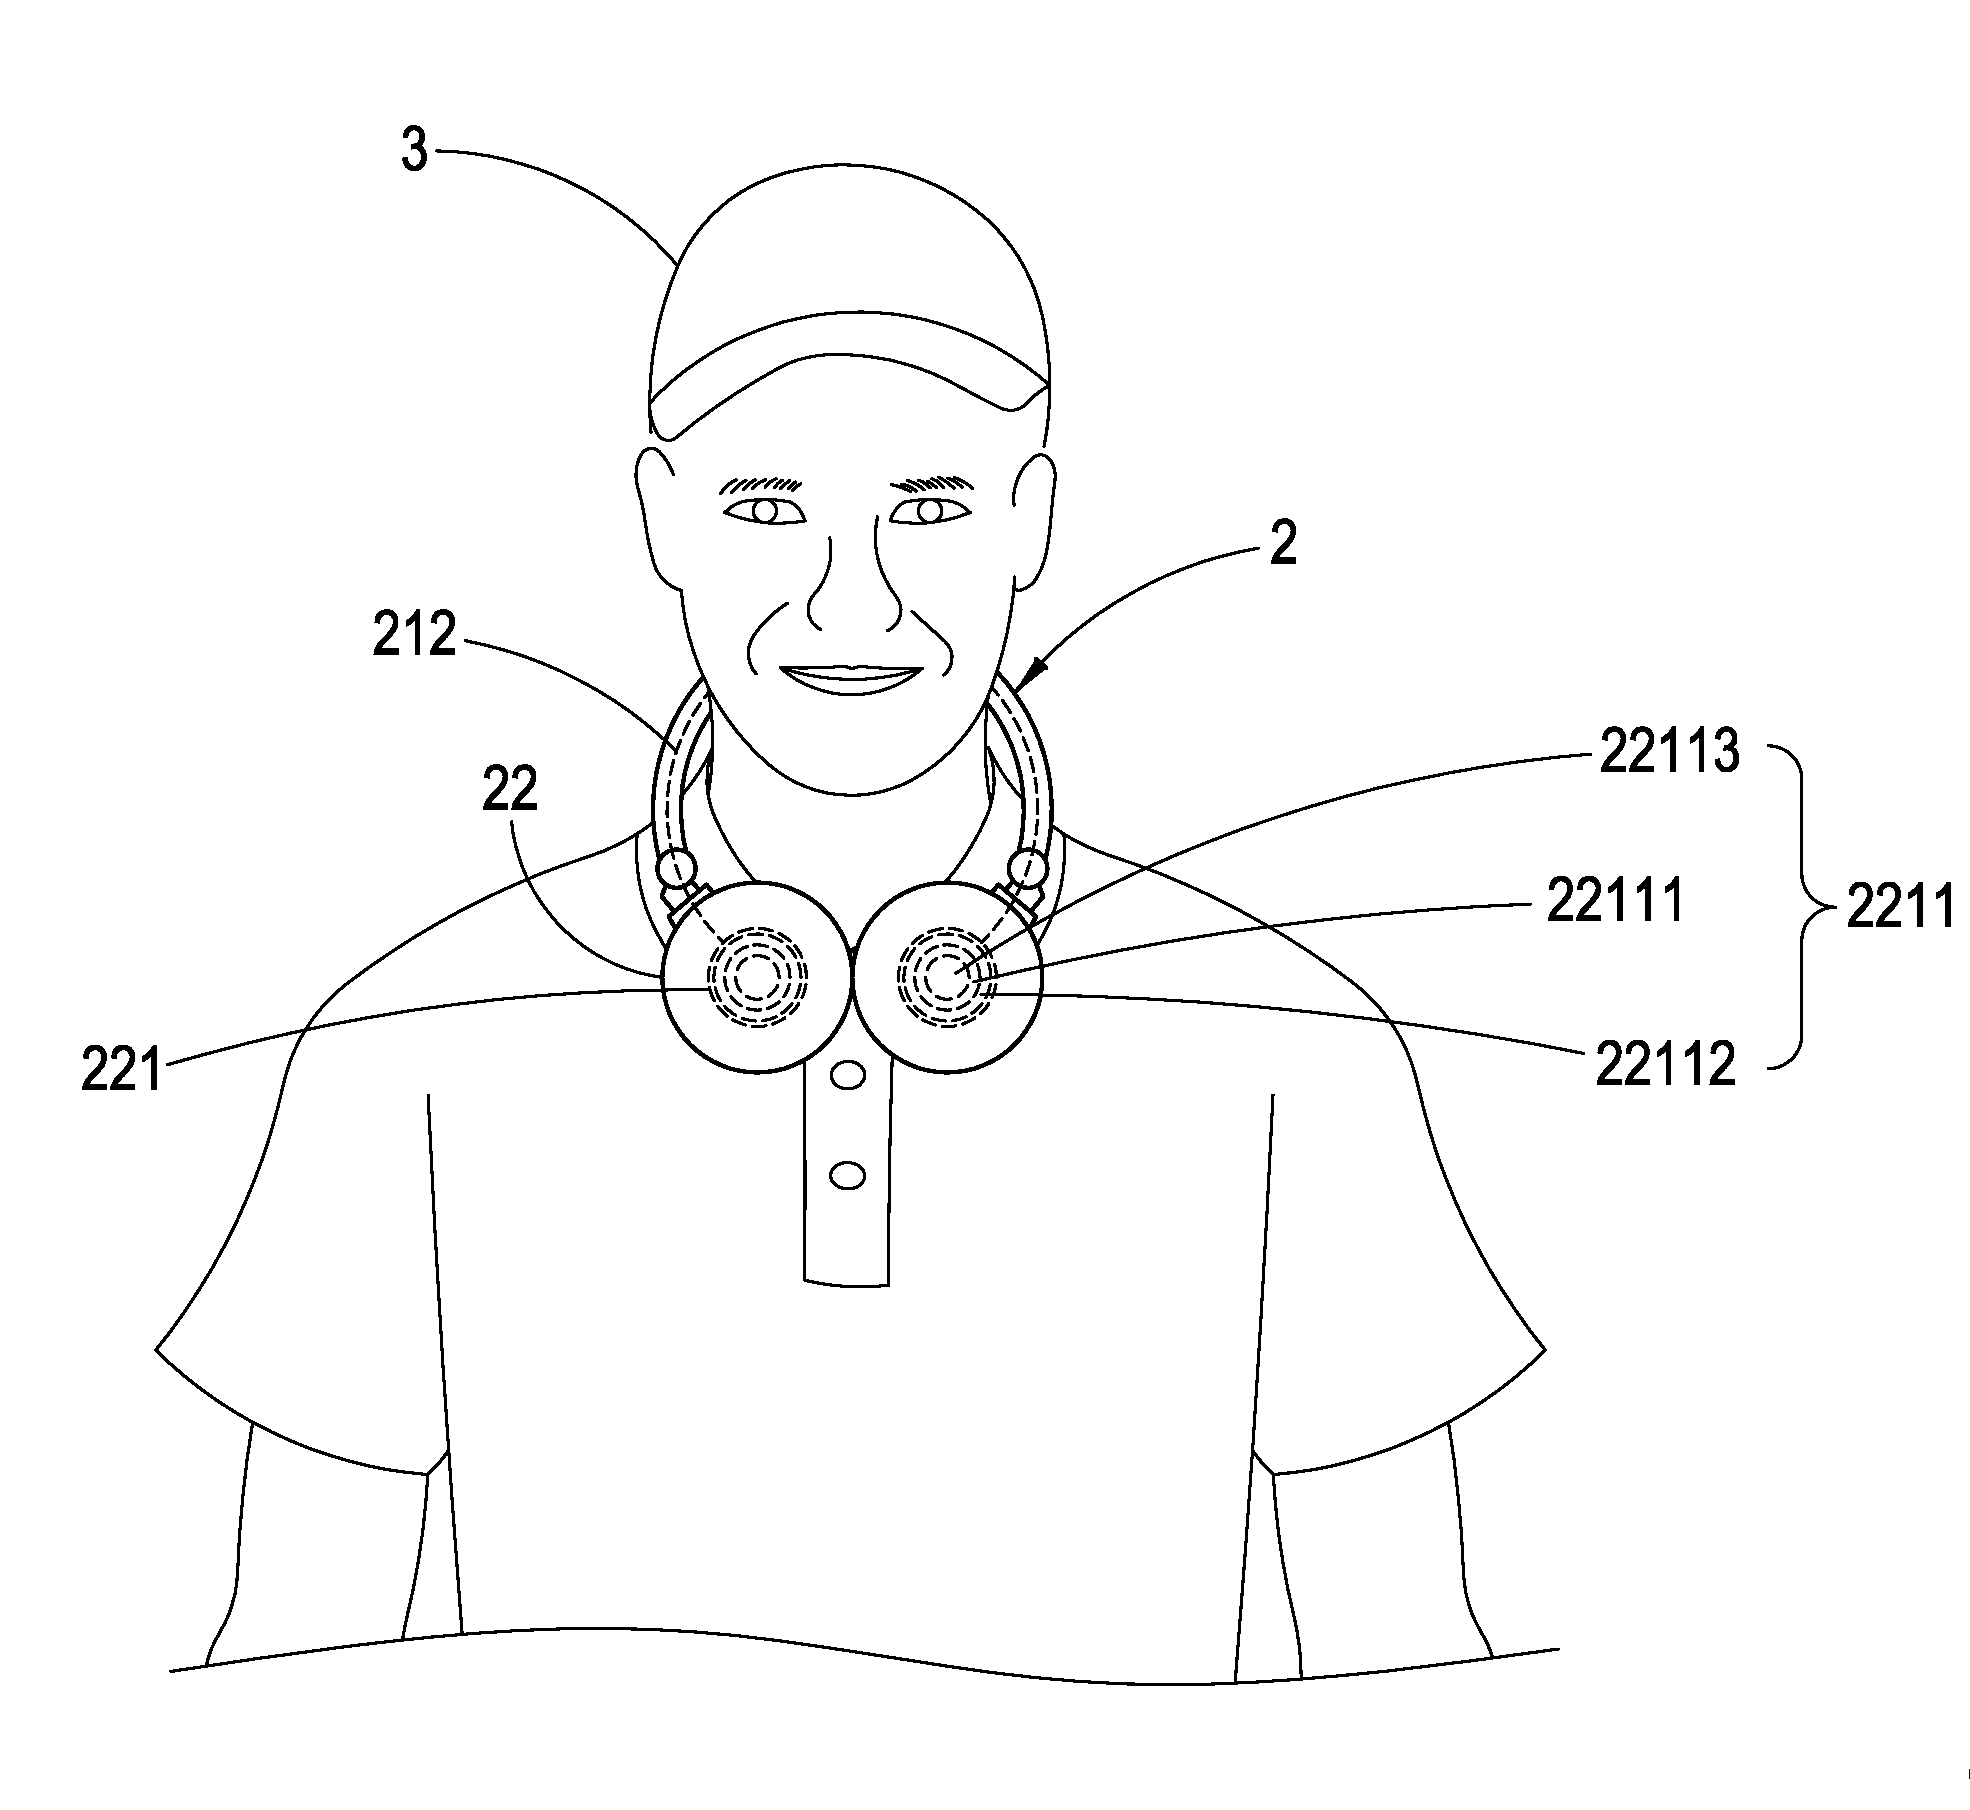 Wearable sound box apparatus